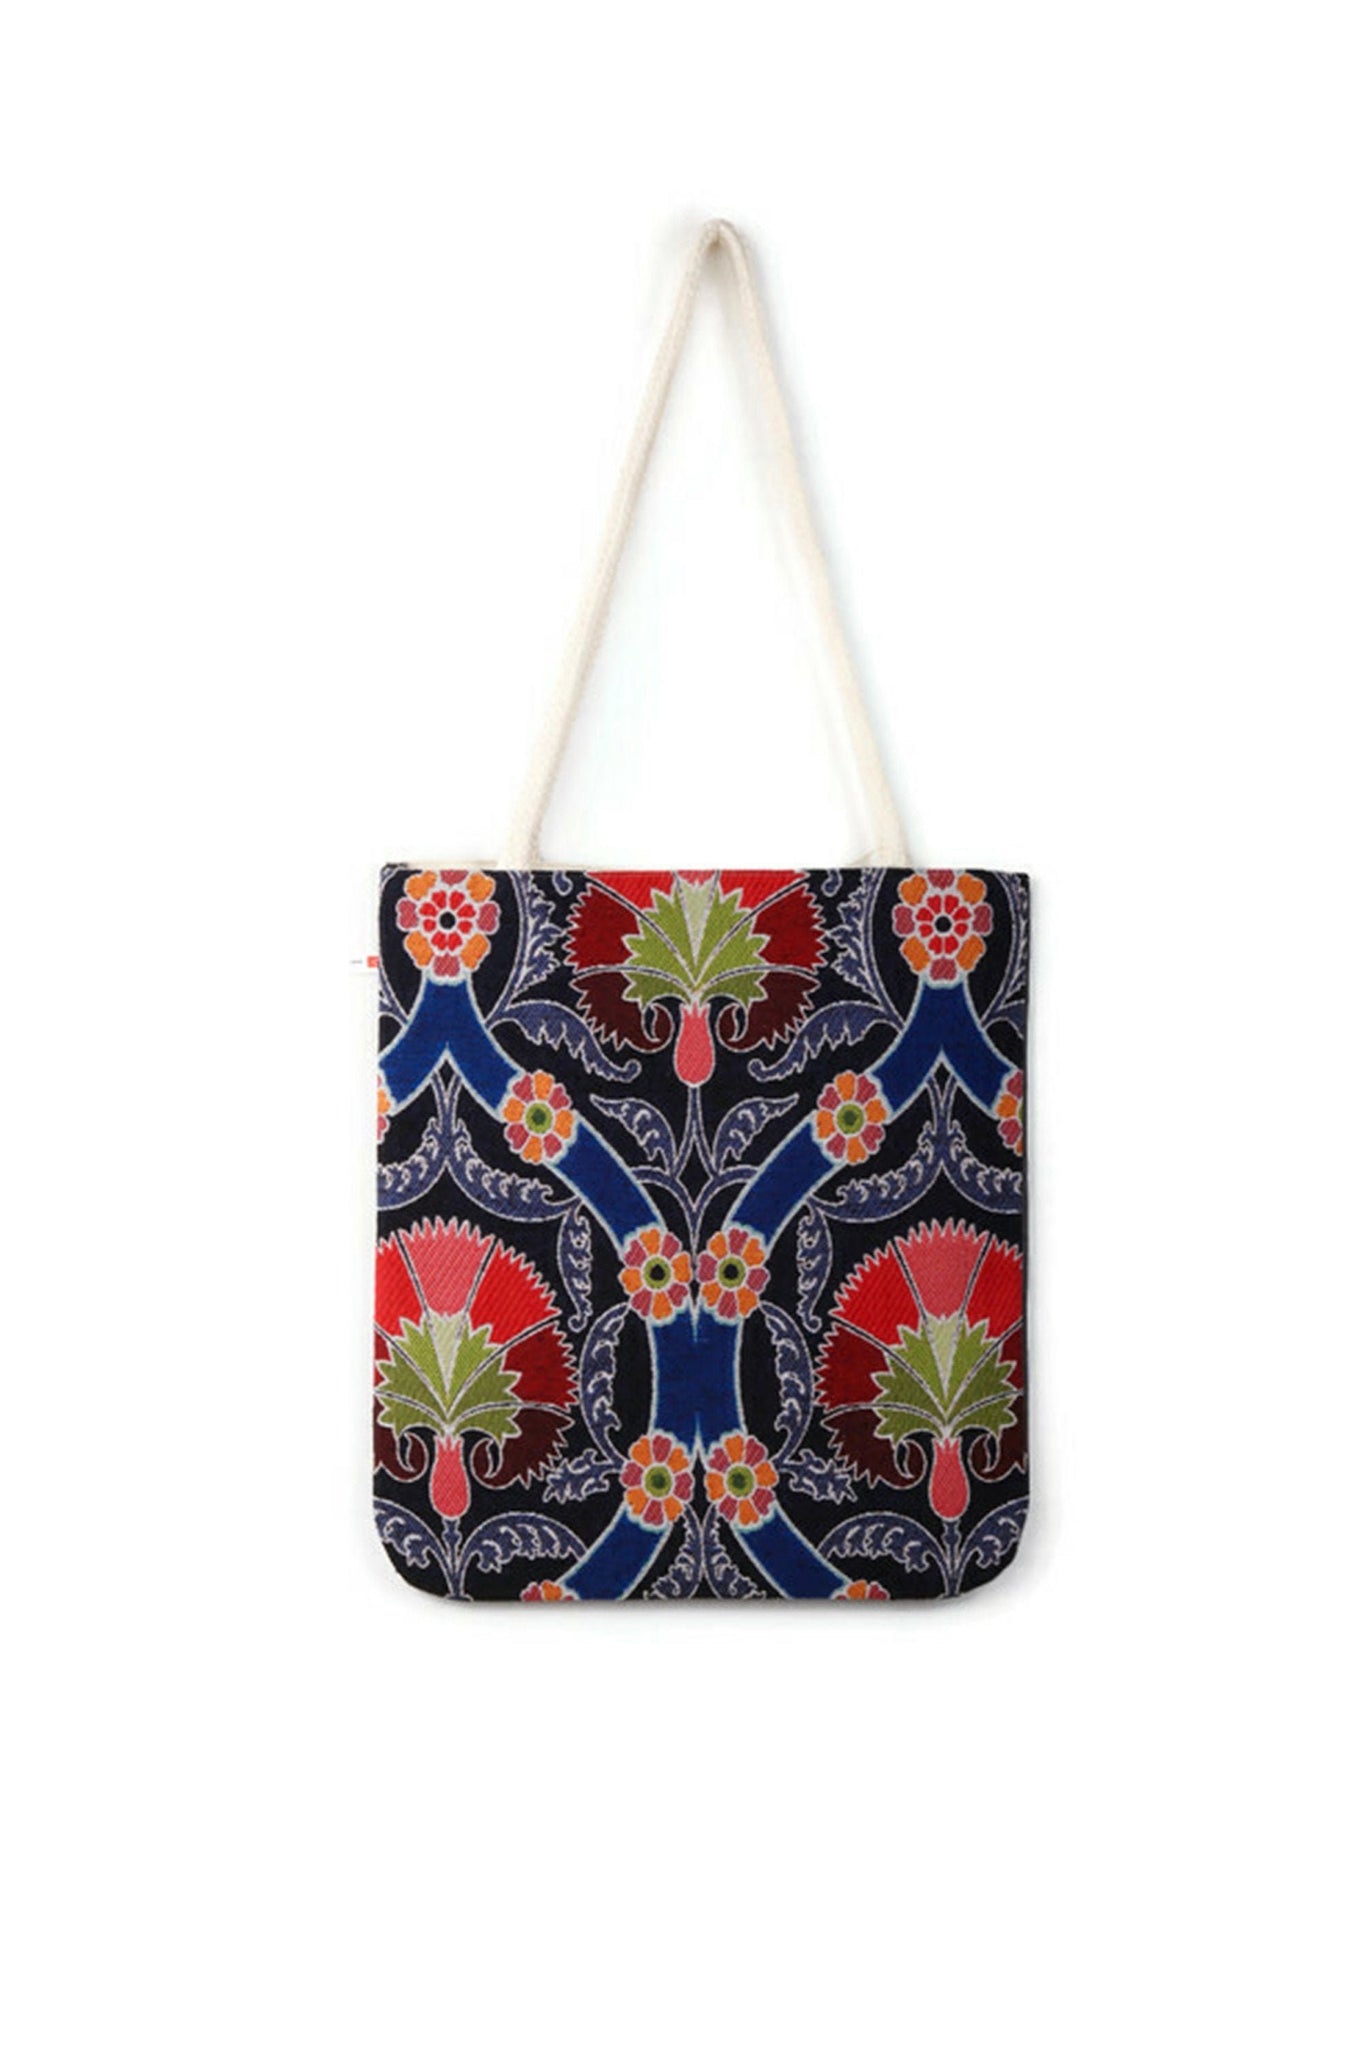 Purses Bags - Store for ethnic bohemian bags, purses, shoulder